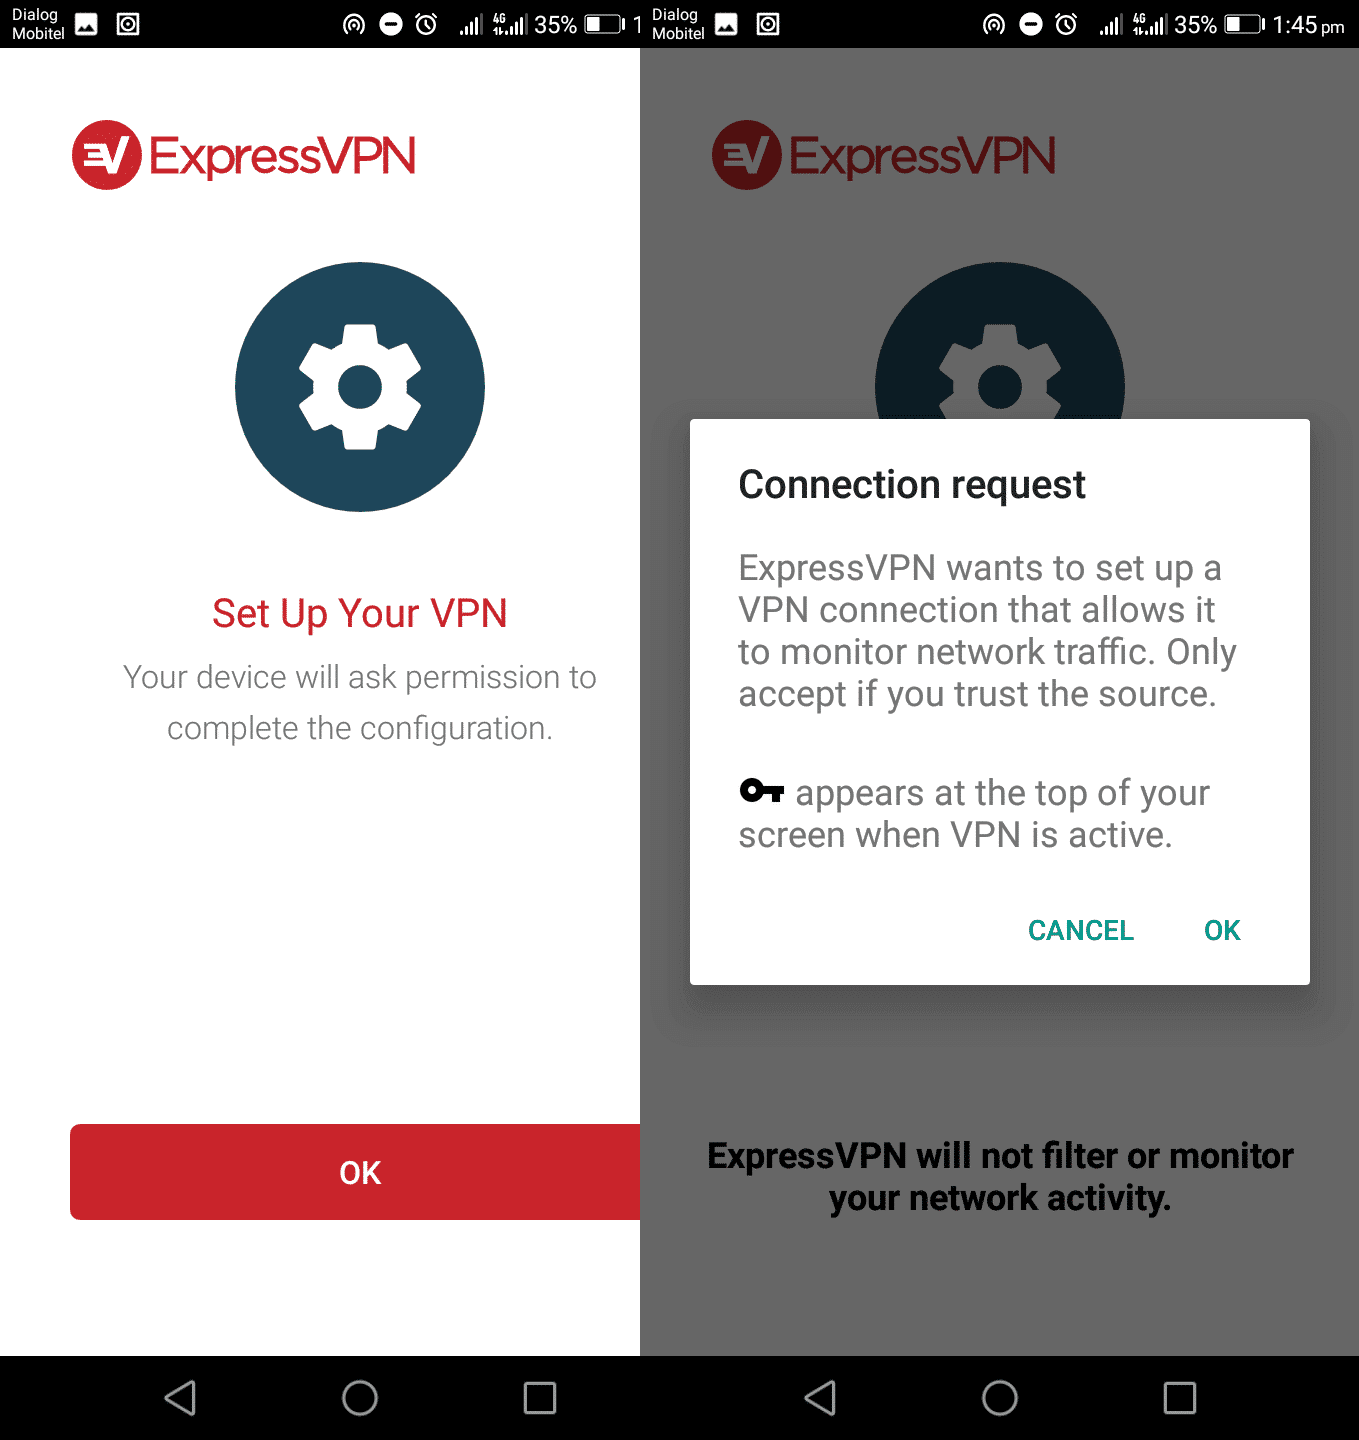 ExpressVPN Connection Request